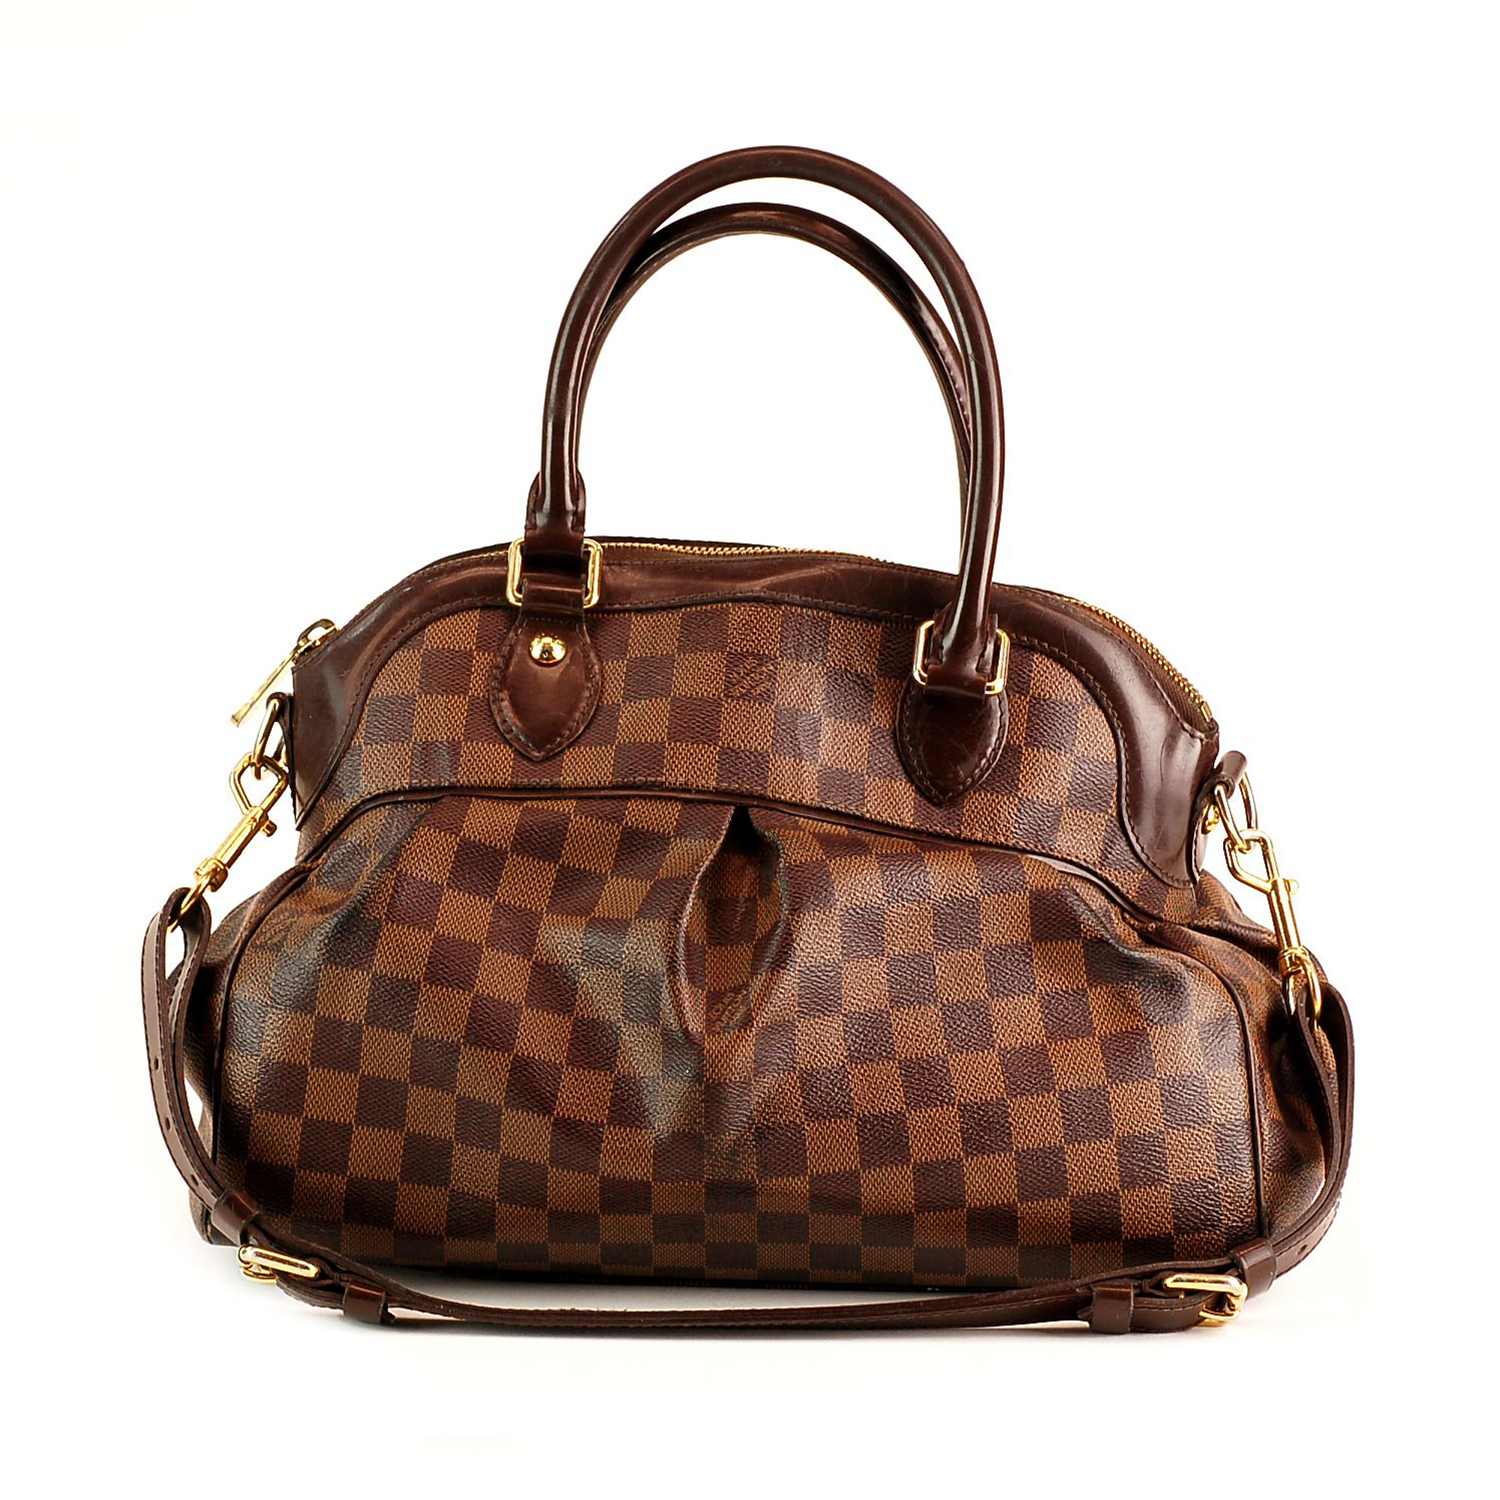 Louis Vuitton Damier Ebene Trevi PM Handbag | eBay